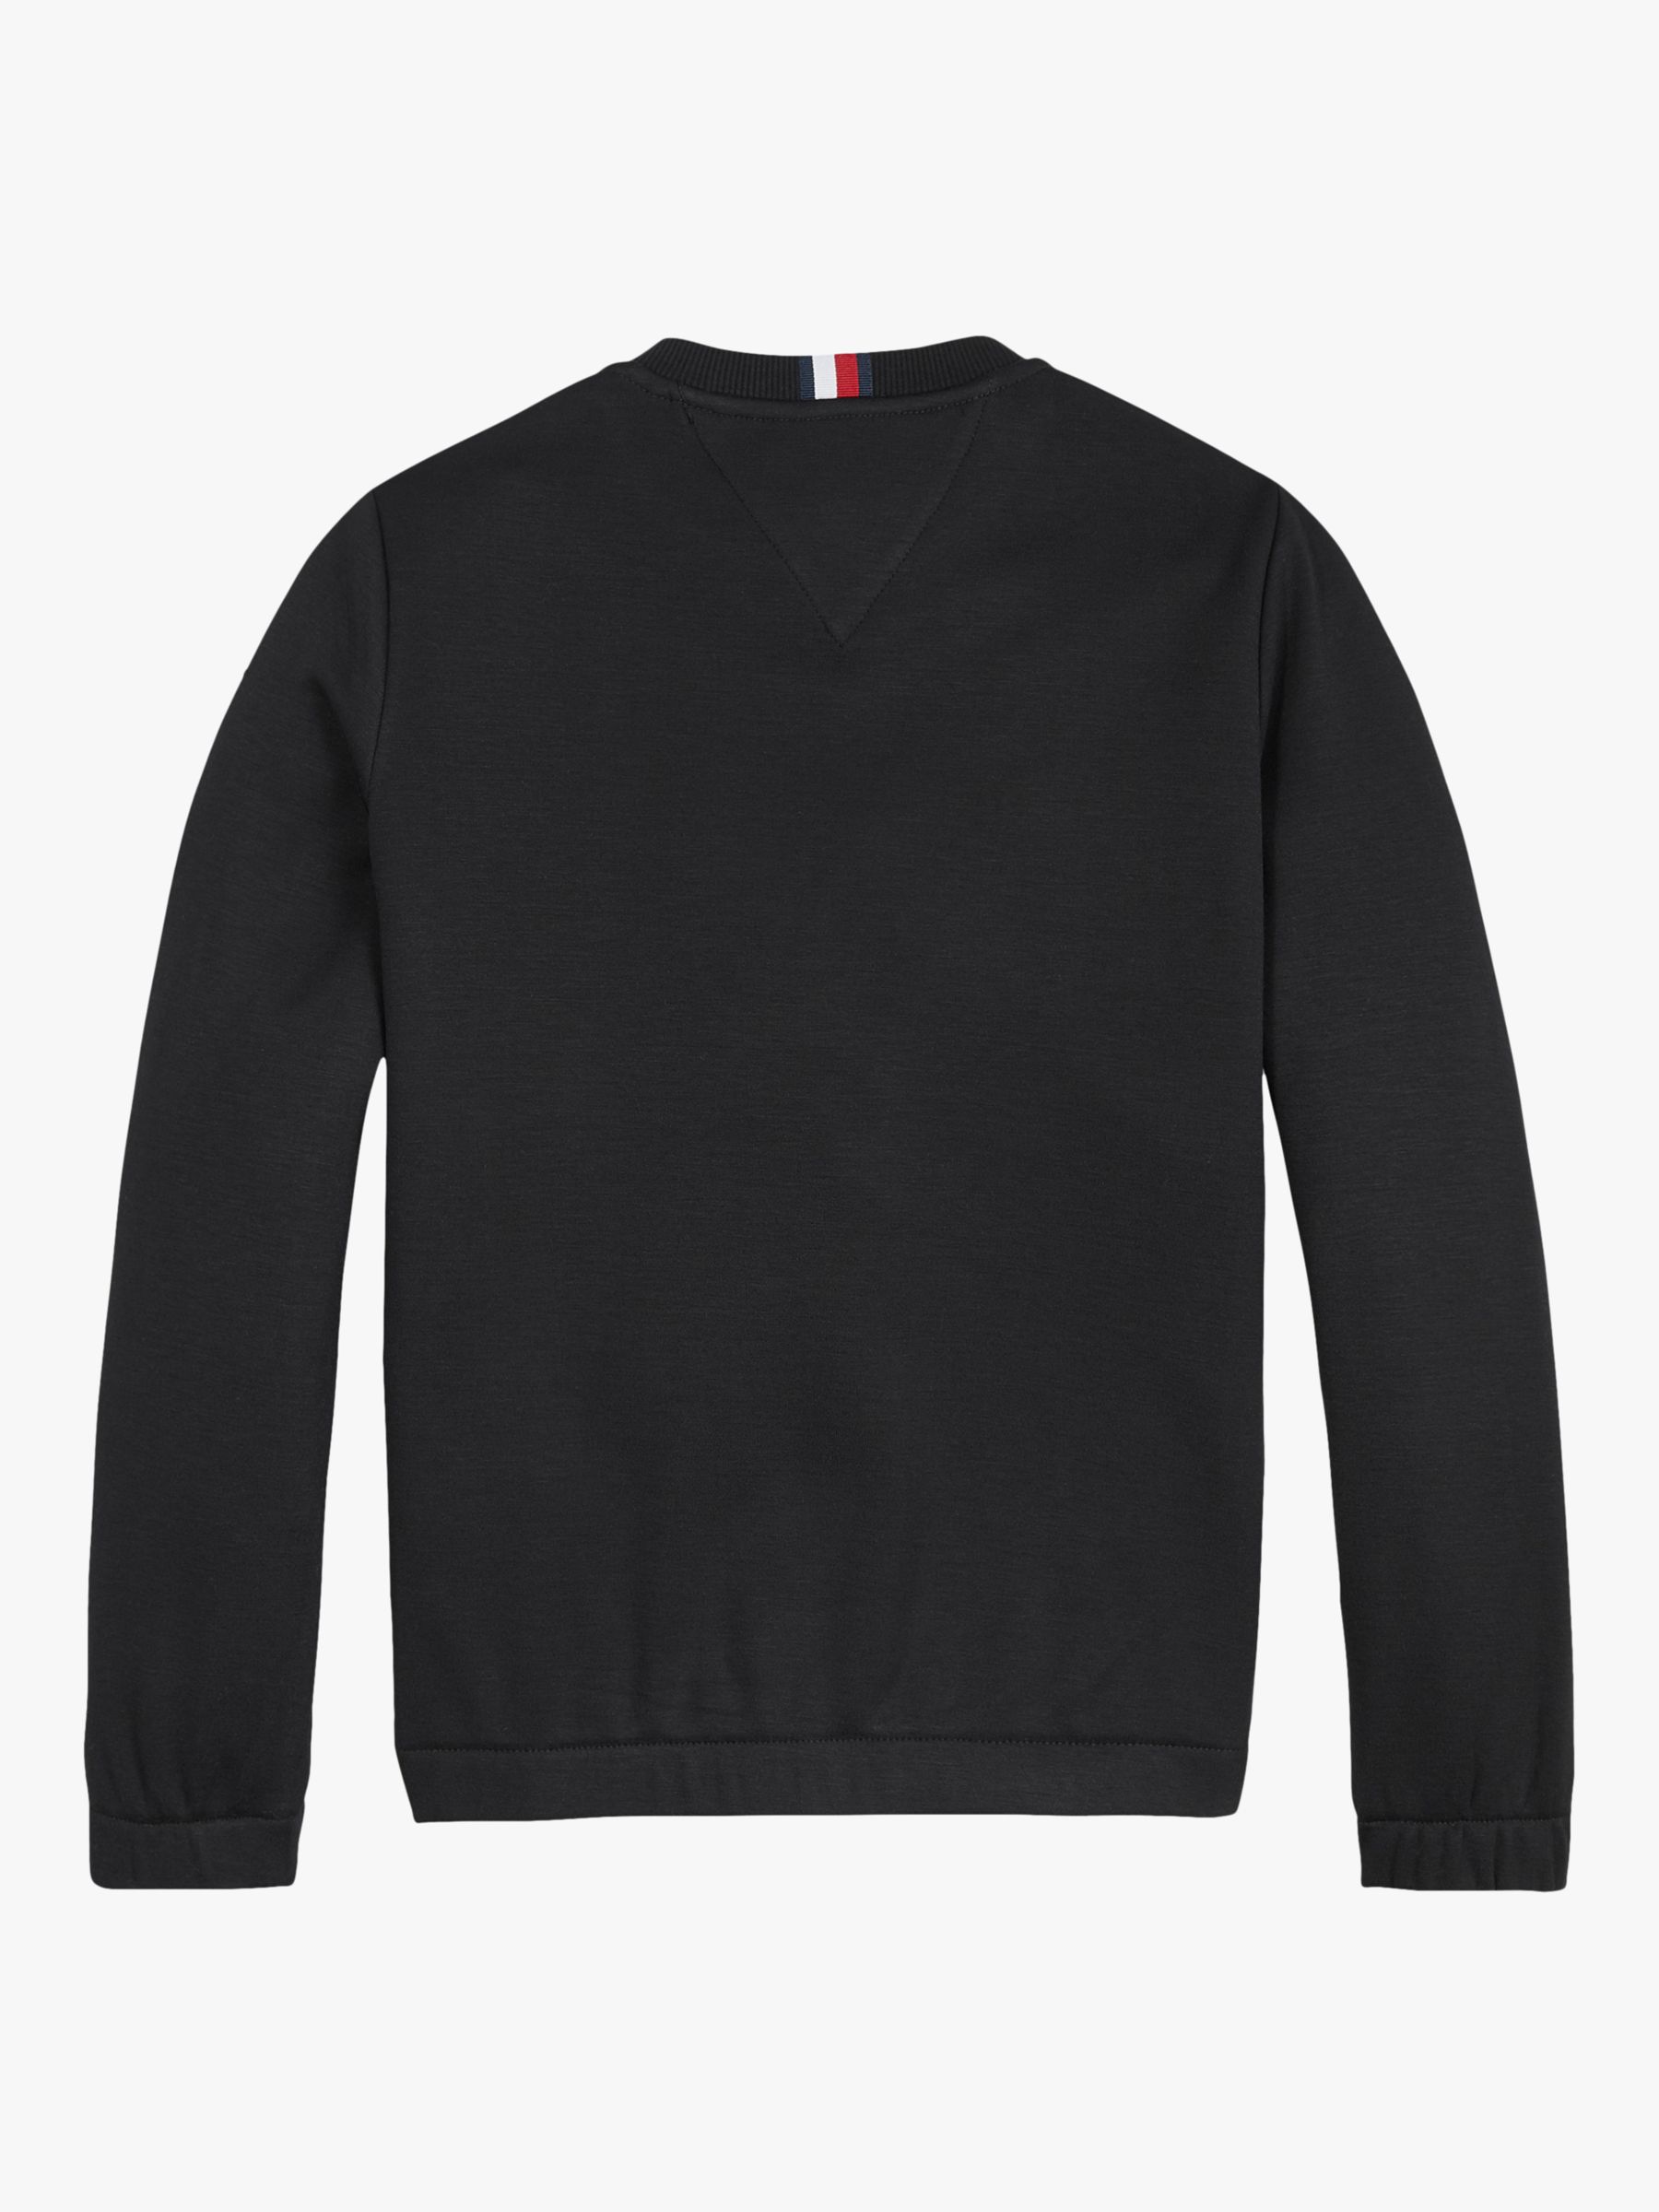 Tommy Hilfiger Kids' Contrast Panel Fleece Sweatshirt, Black, 4 years